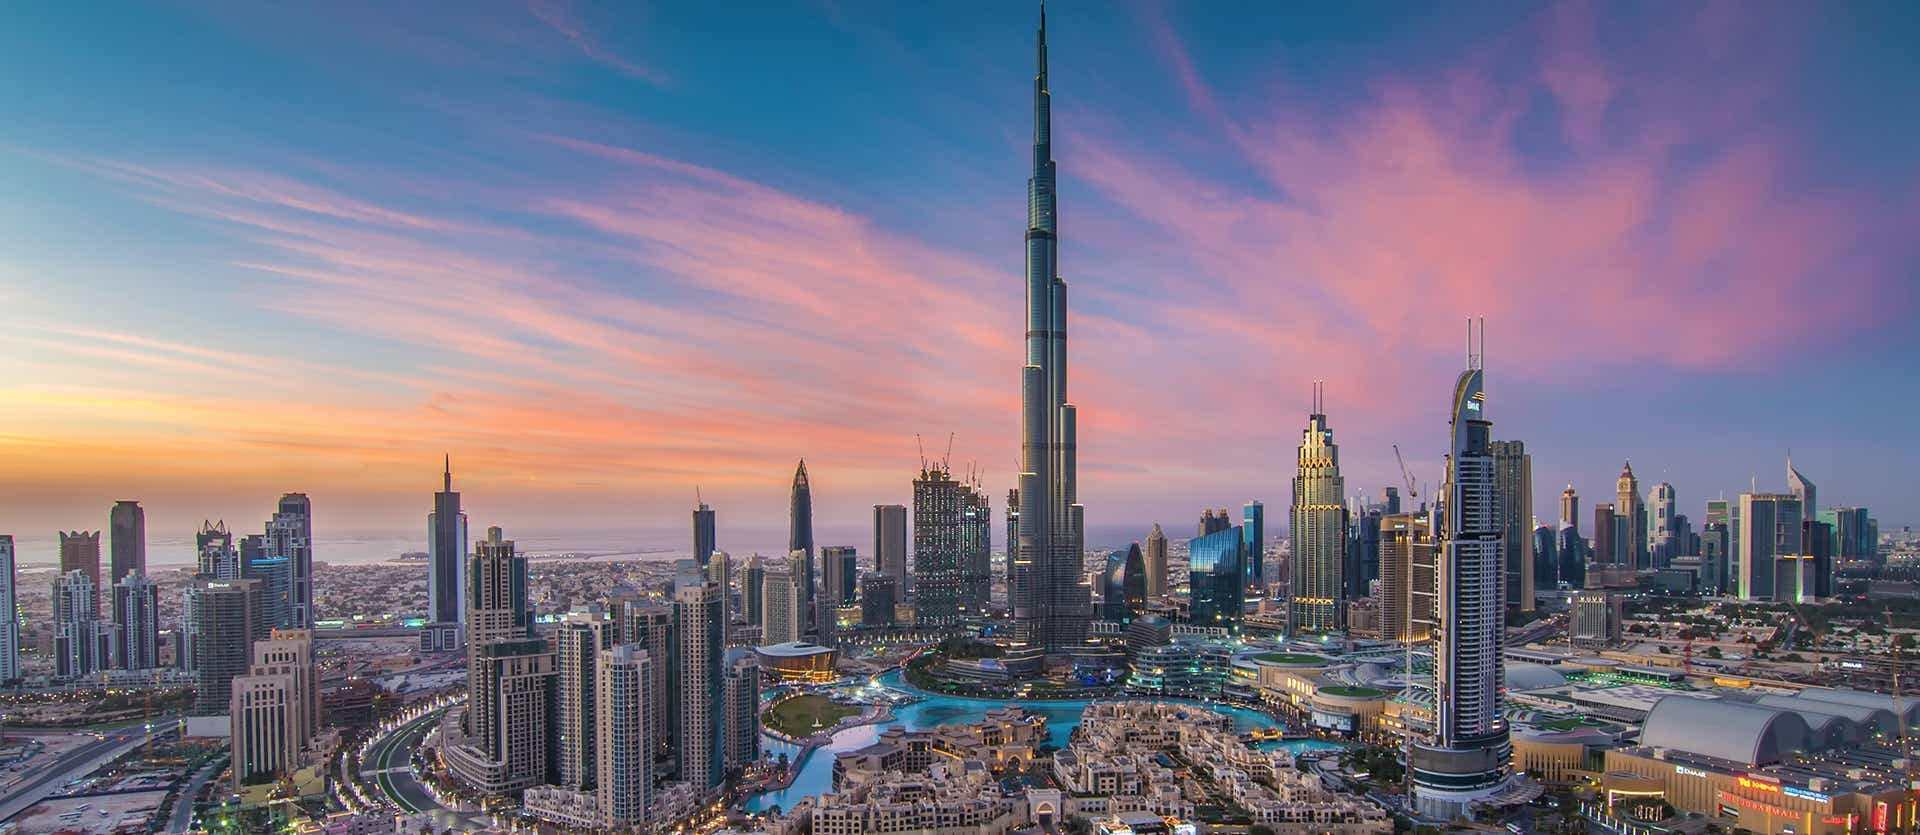 Burj Khalifa <span class="iconos separador"></span> Dubai